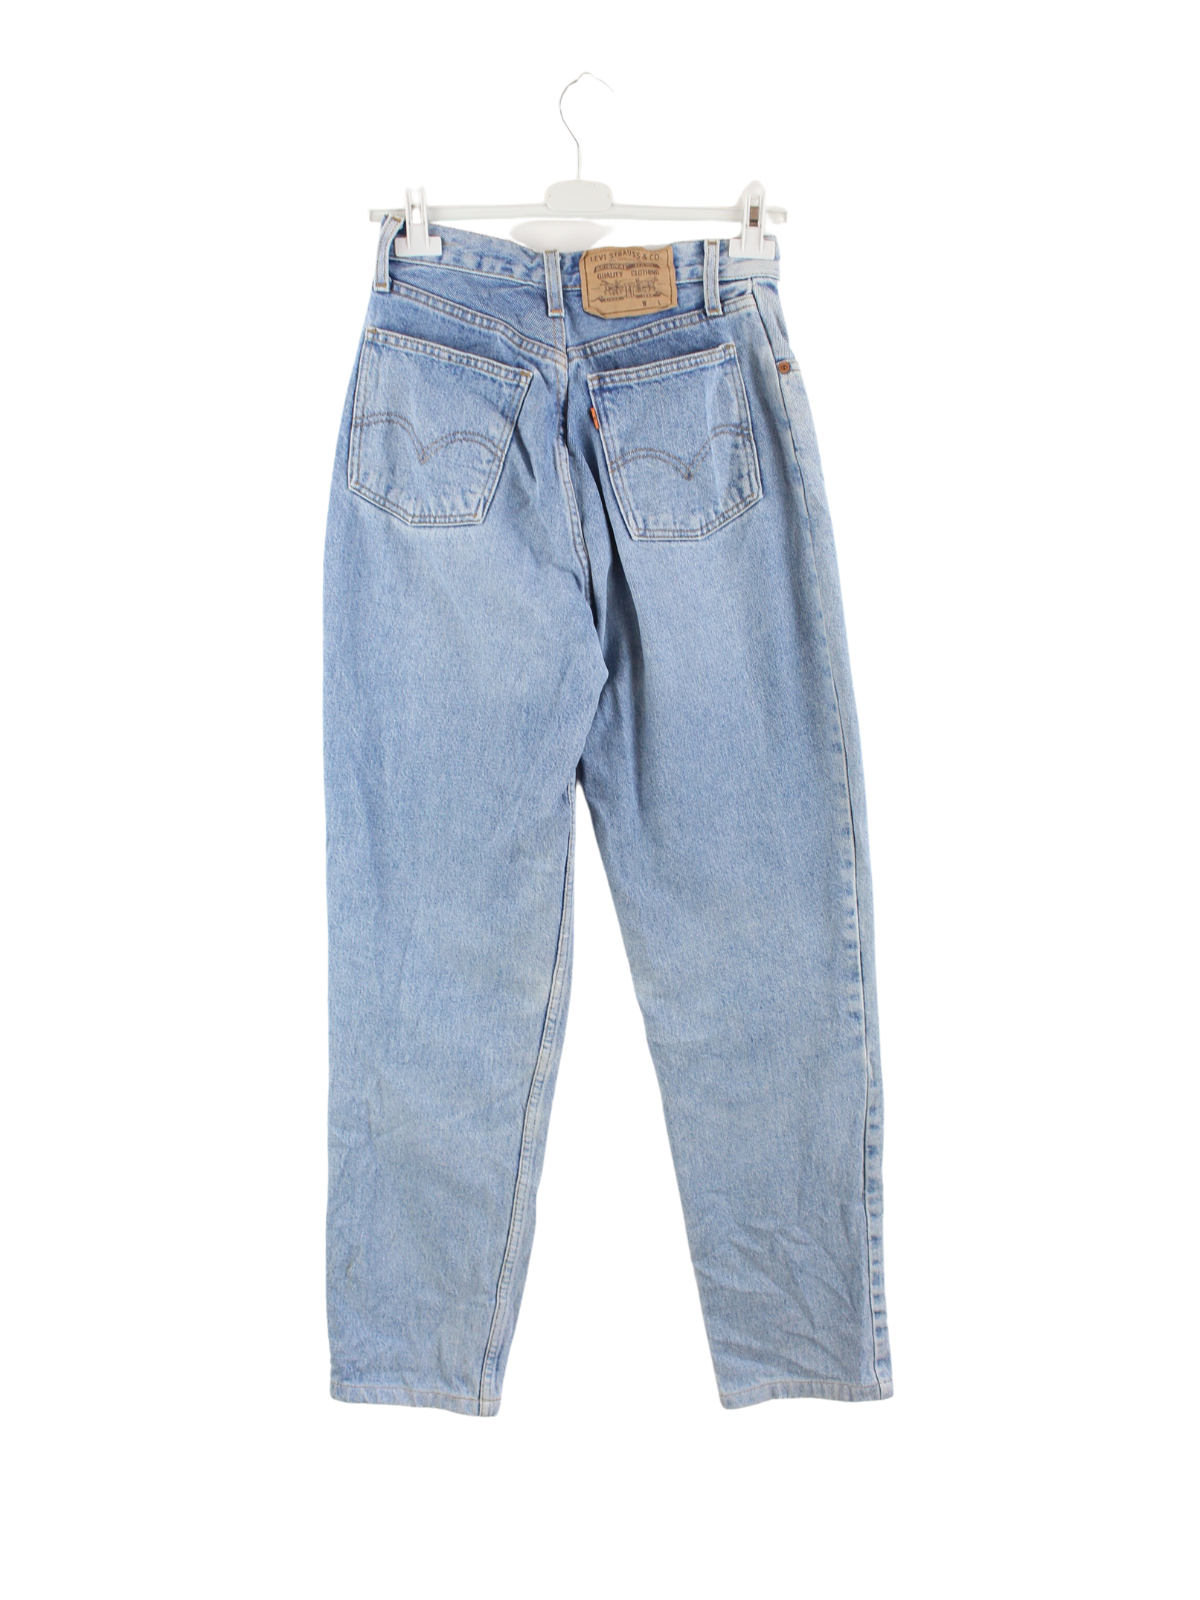 Levi's Orange Tab Damen Jeans Blau W32 L32